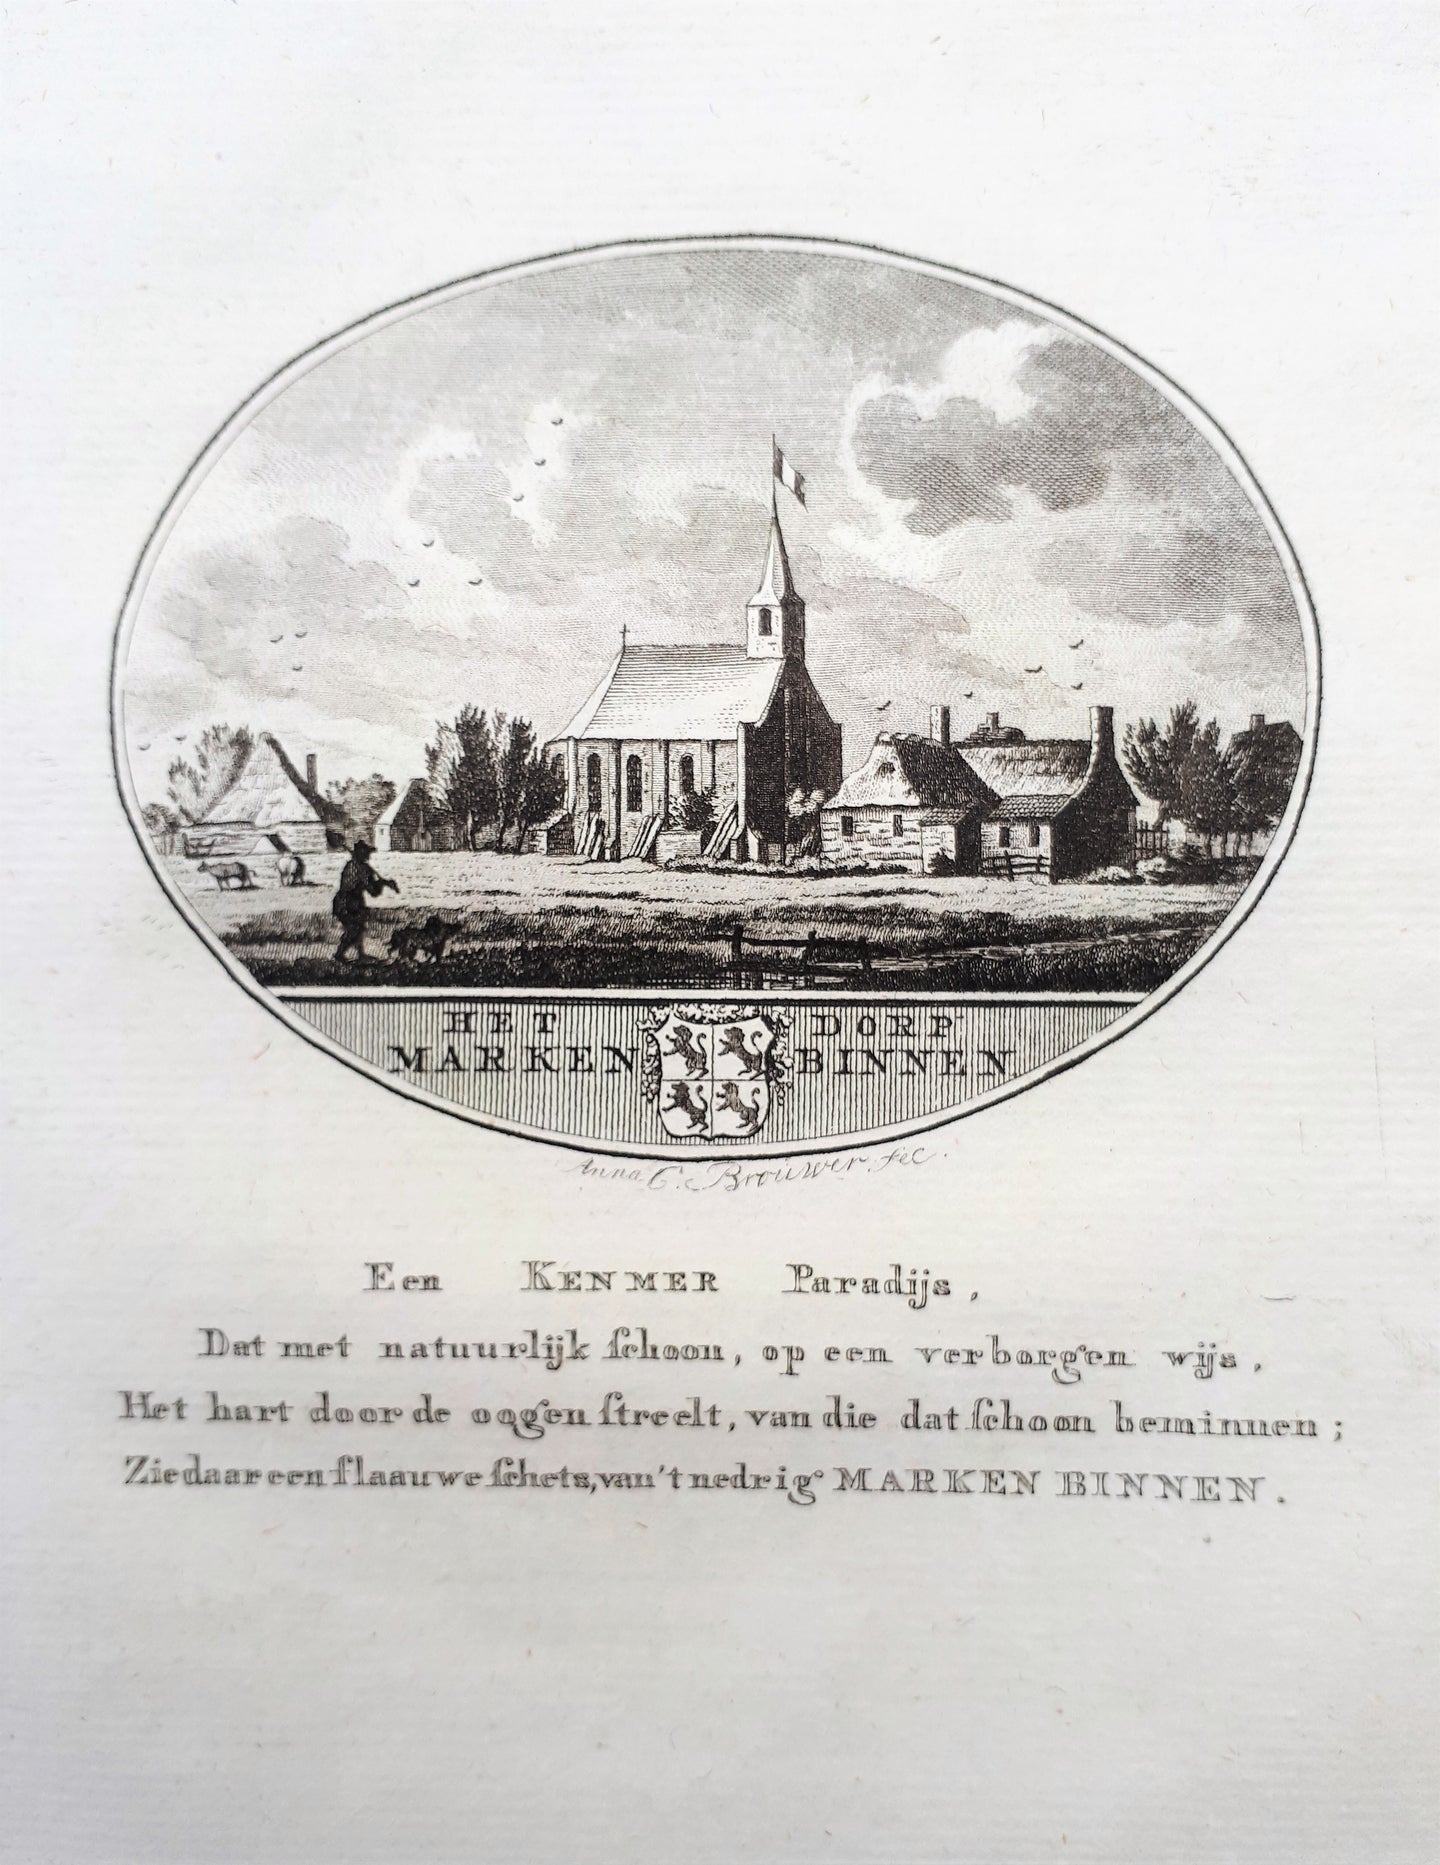 MARKEN-BINNEN - Van Ollefen & Bakker - 1793